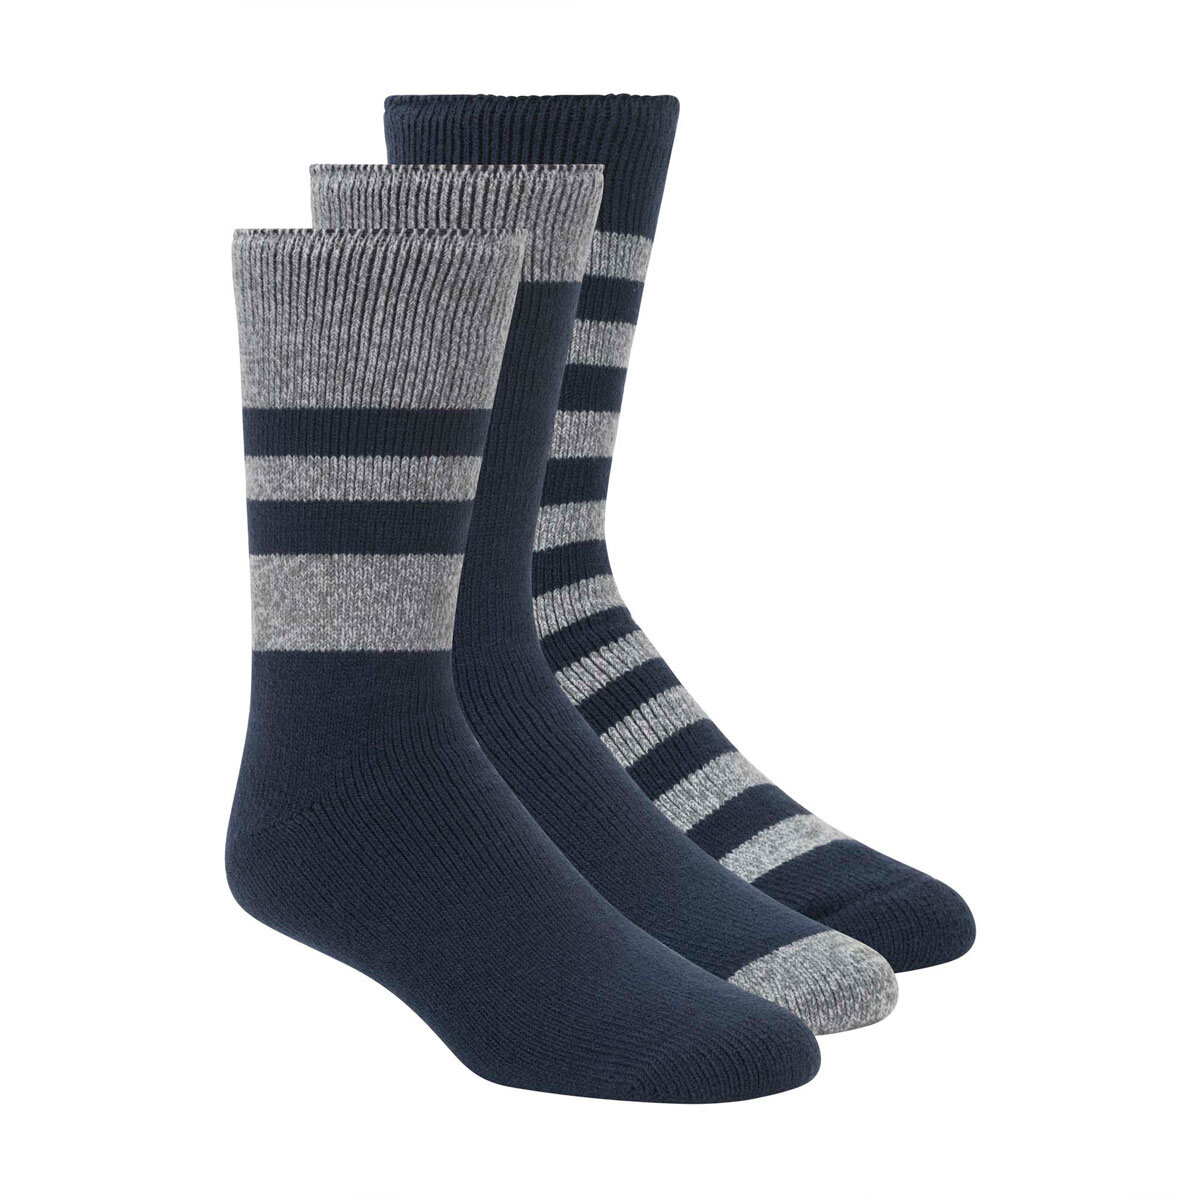 Weatherproof Men's Thermal Crew Socks, 3 Pack in Assorted Colours